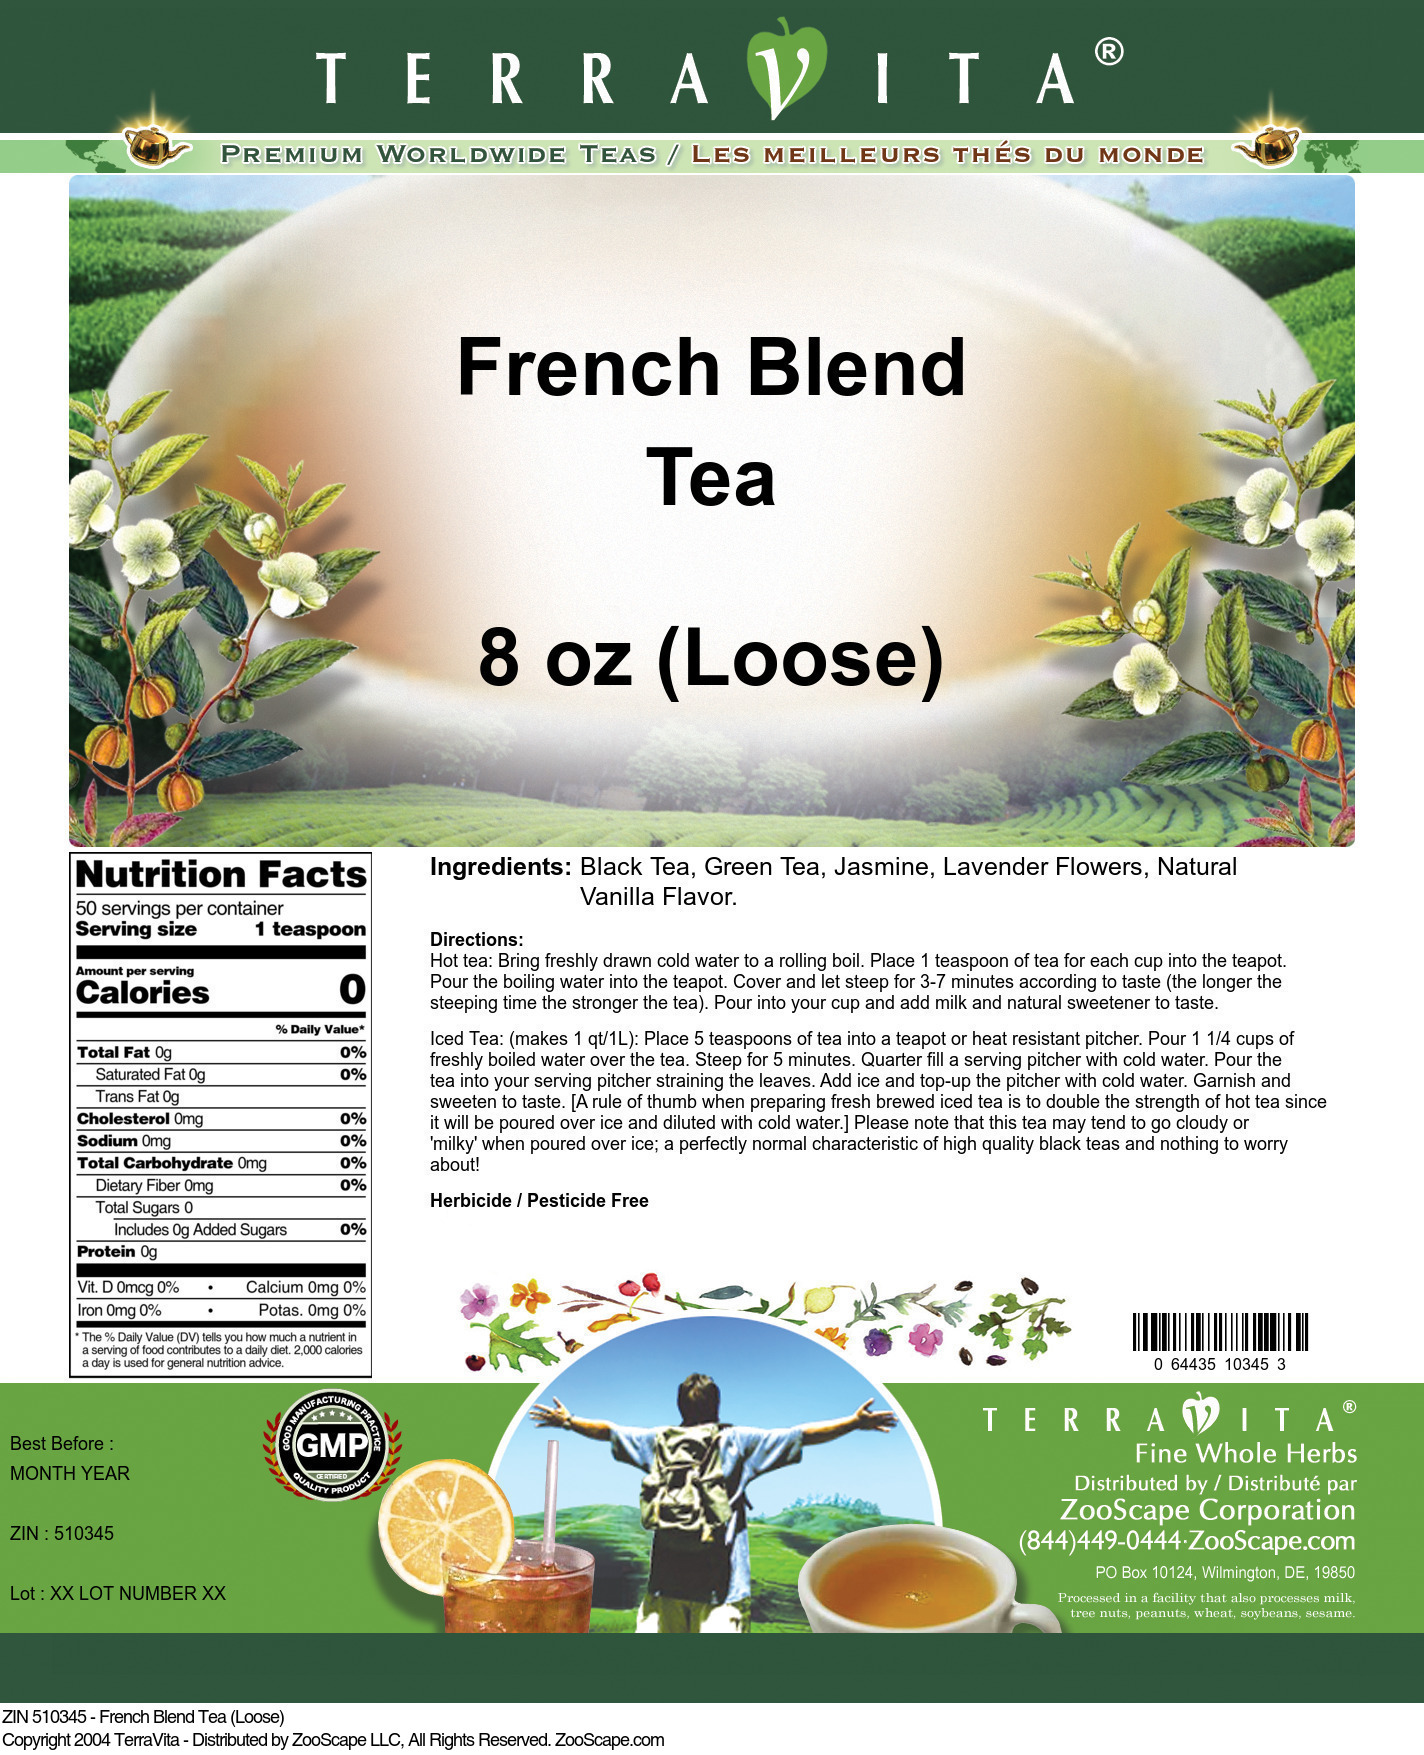 French Blend Tea (Loose) - Label